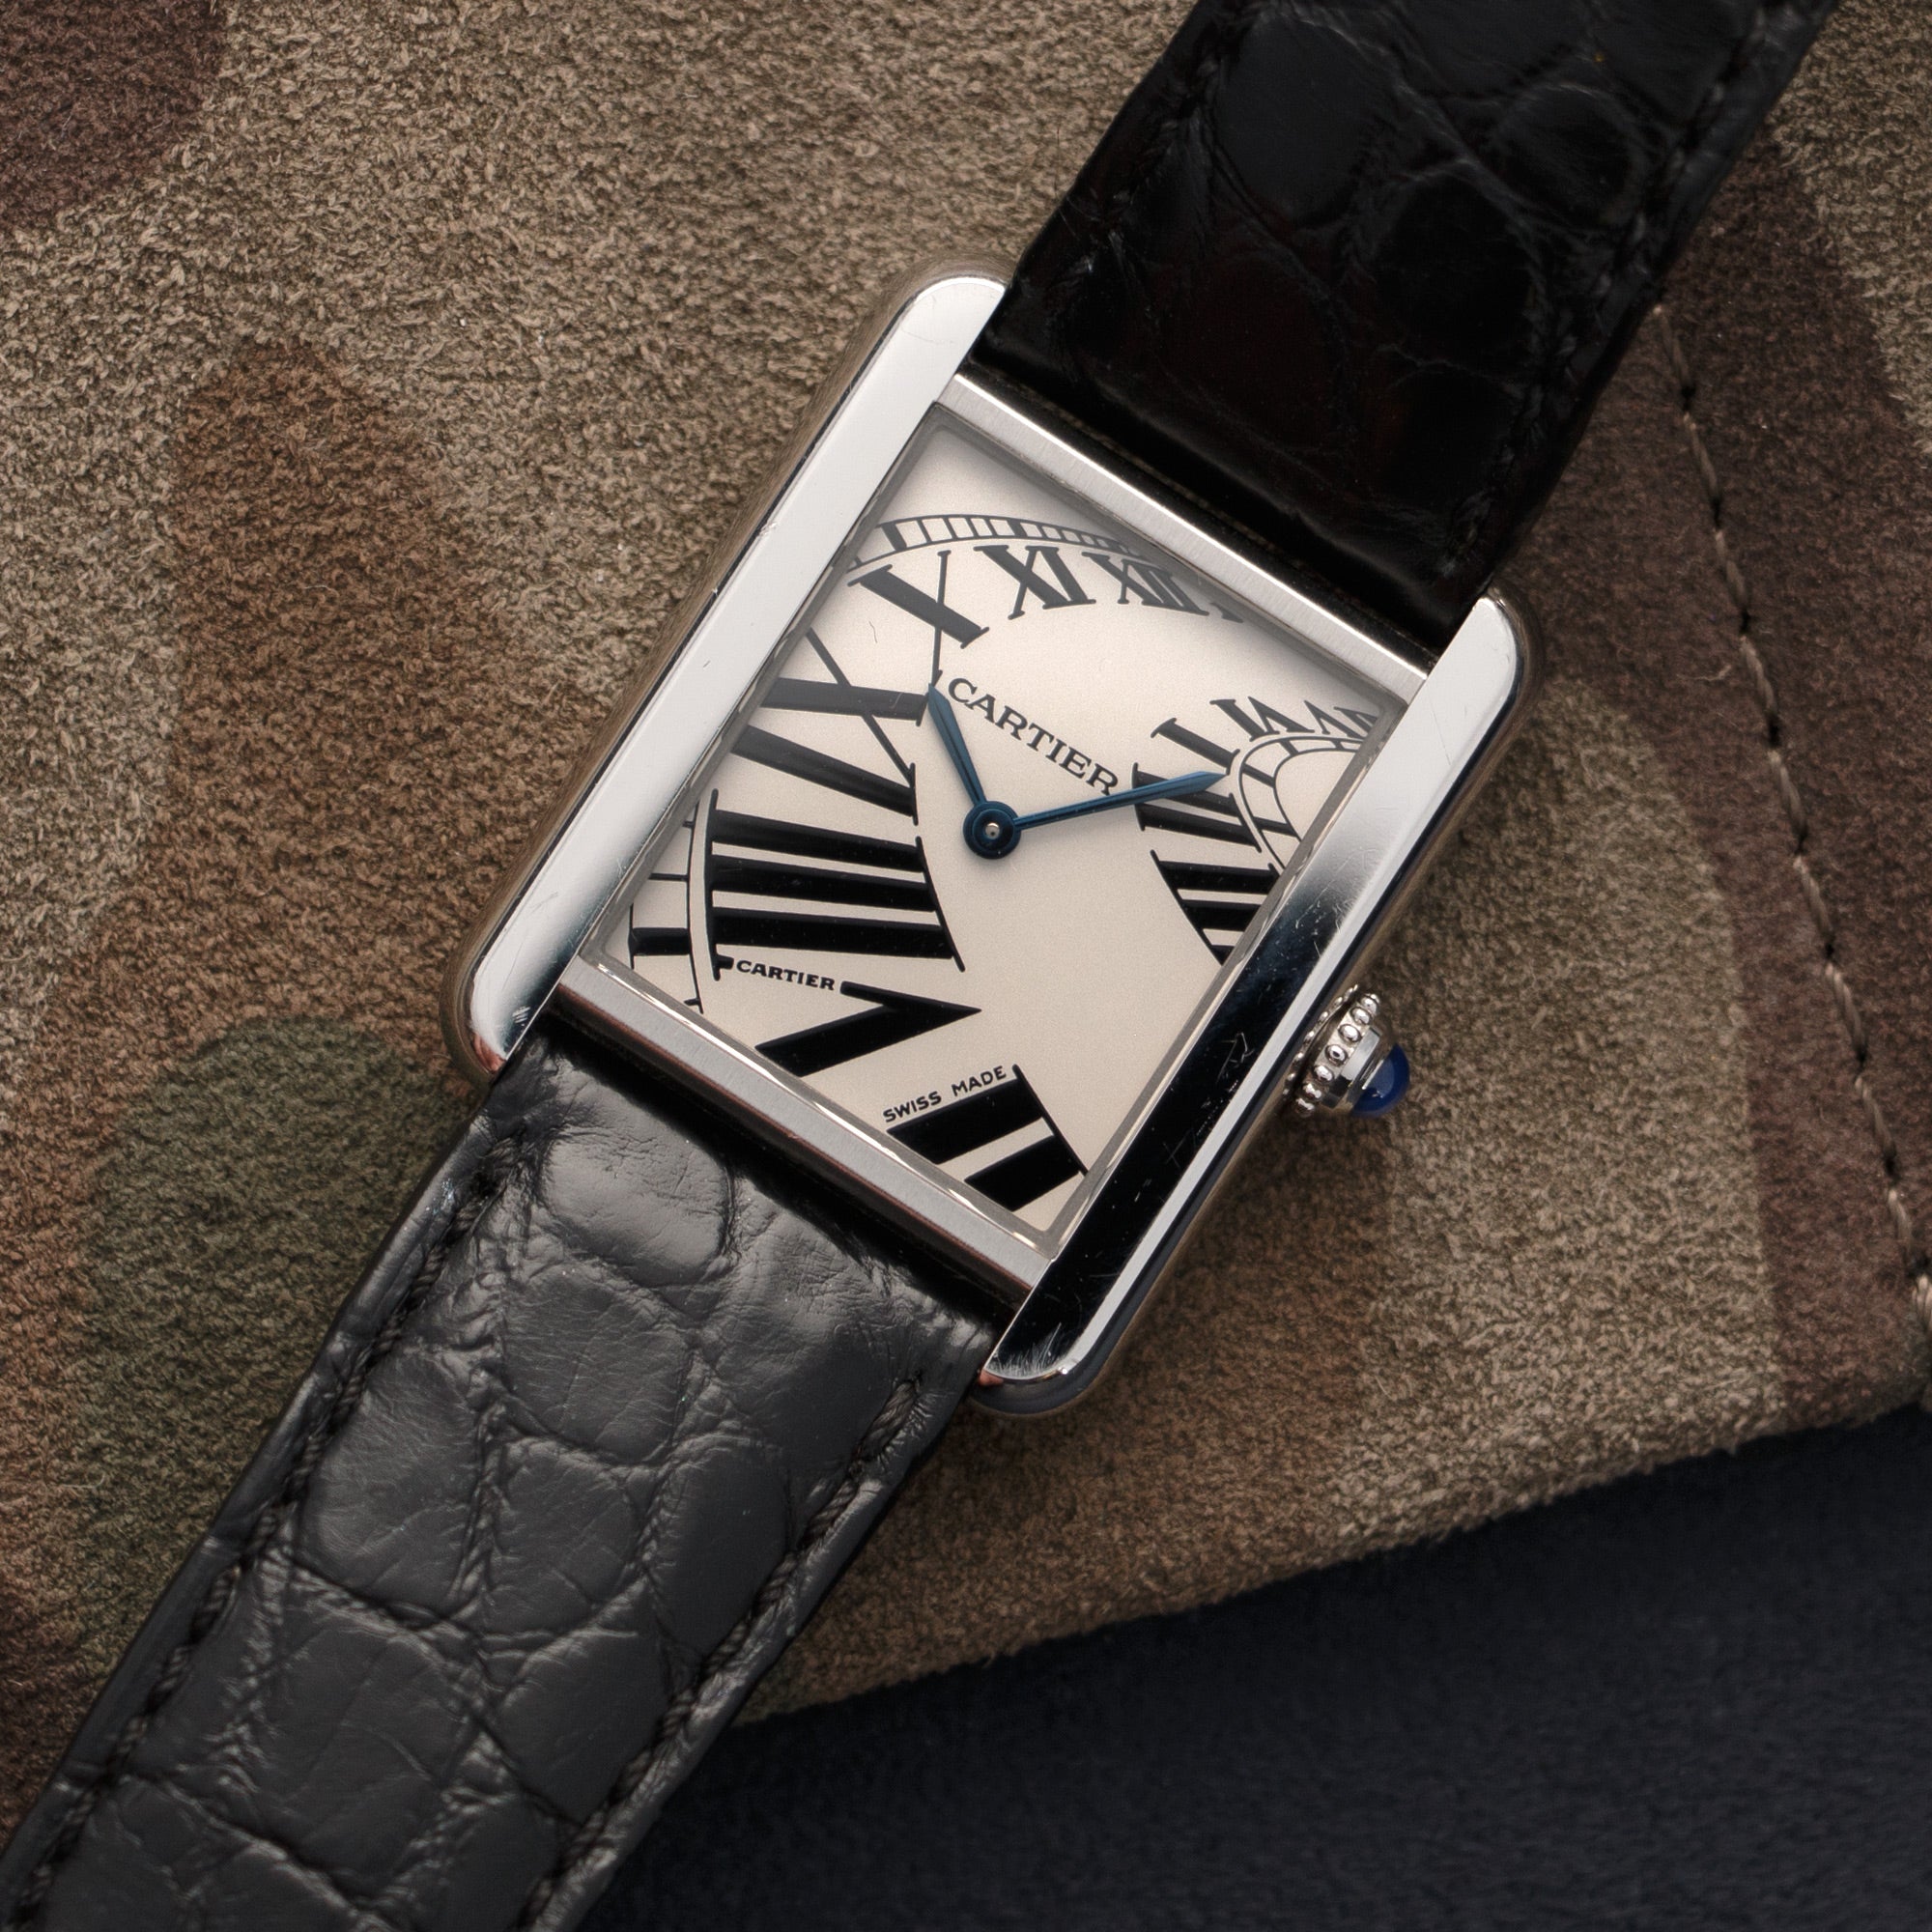 Cartier - Cartier Tank Solo Piano Dial Watch - The Keystone Watches